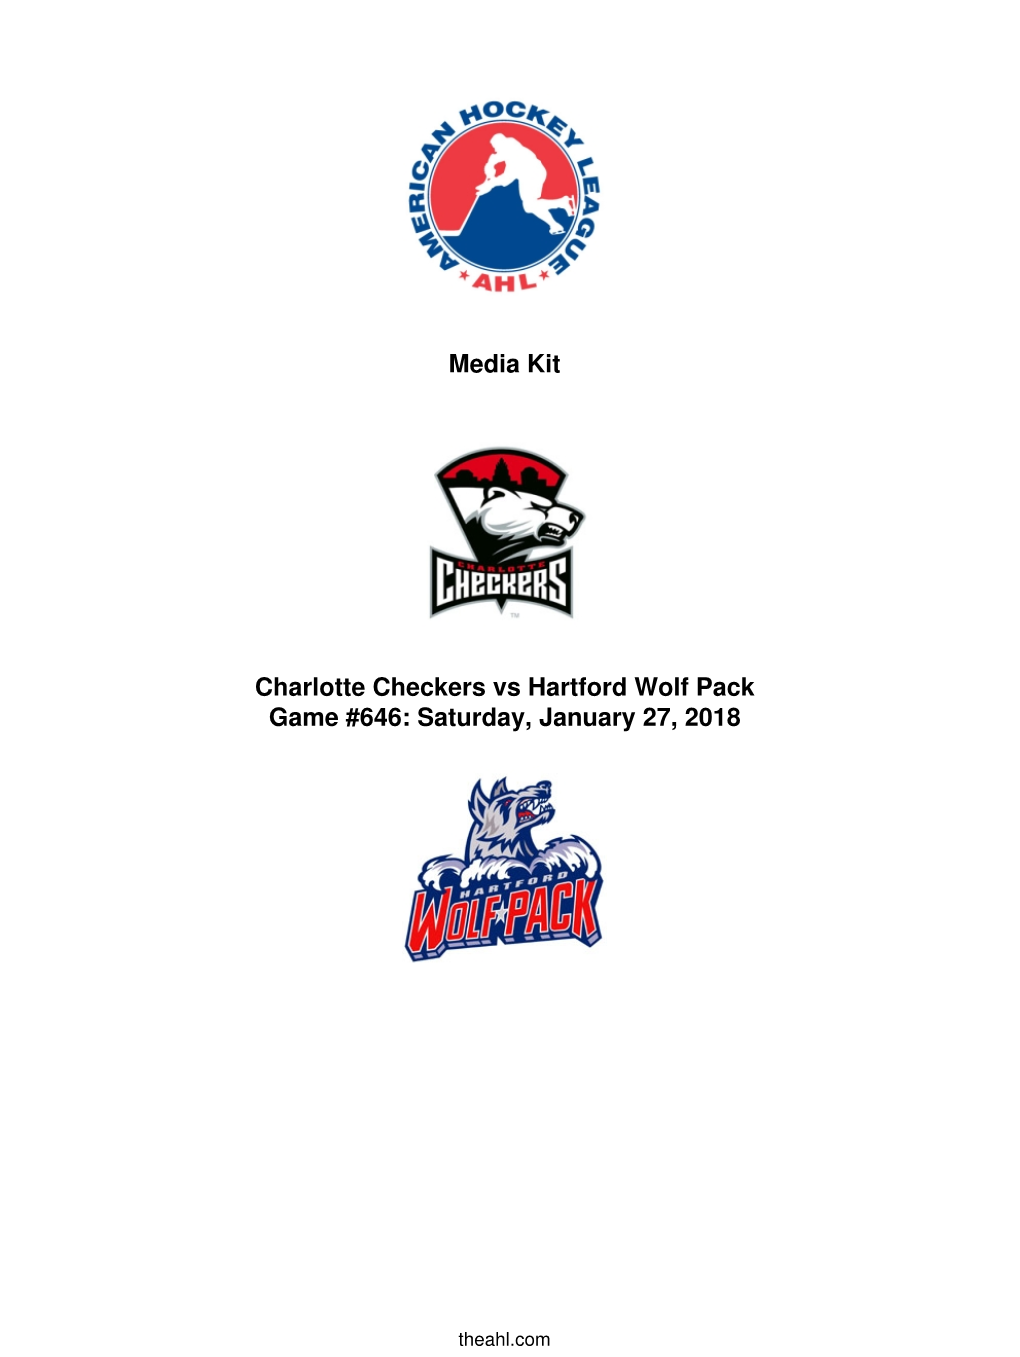 Media Kit Charlotte Checkers Vs Hartford Wolf Pack Game #646